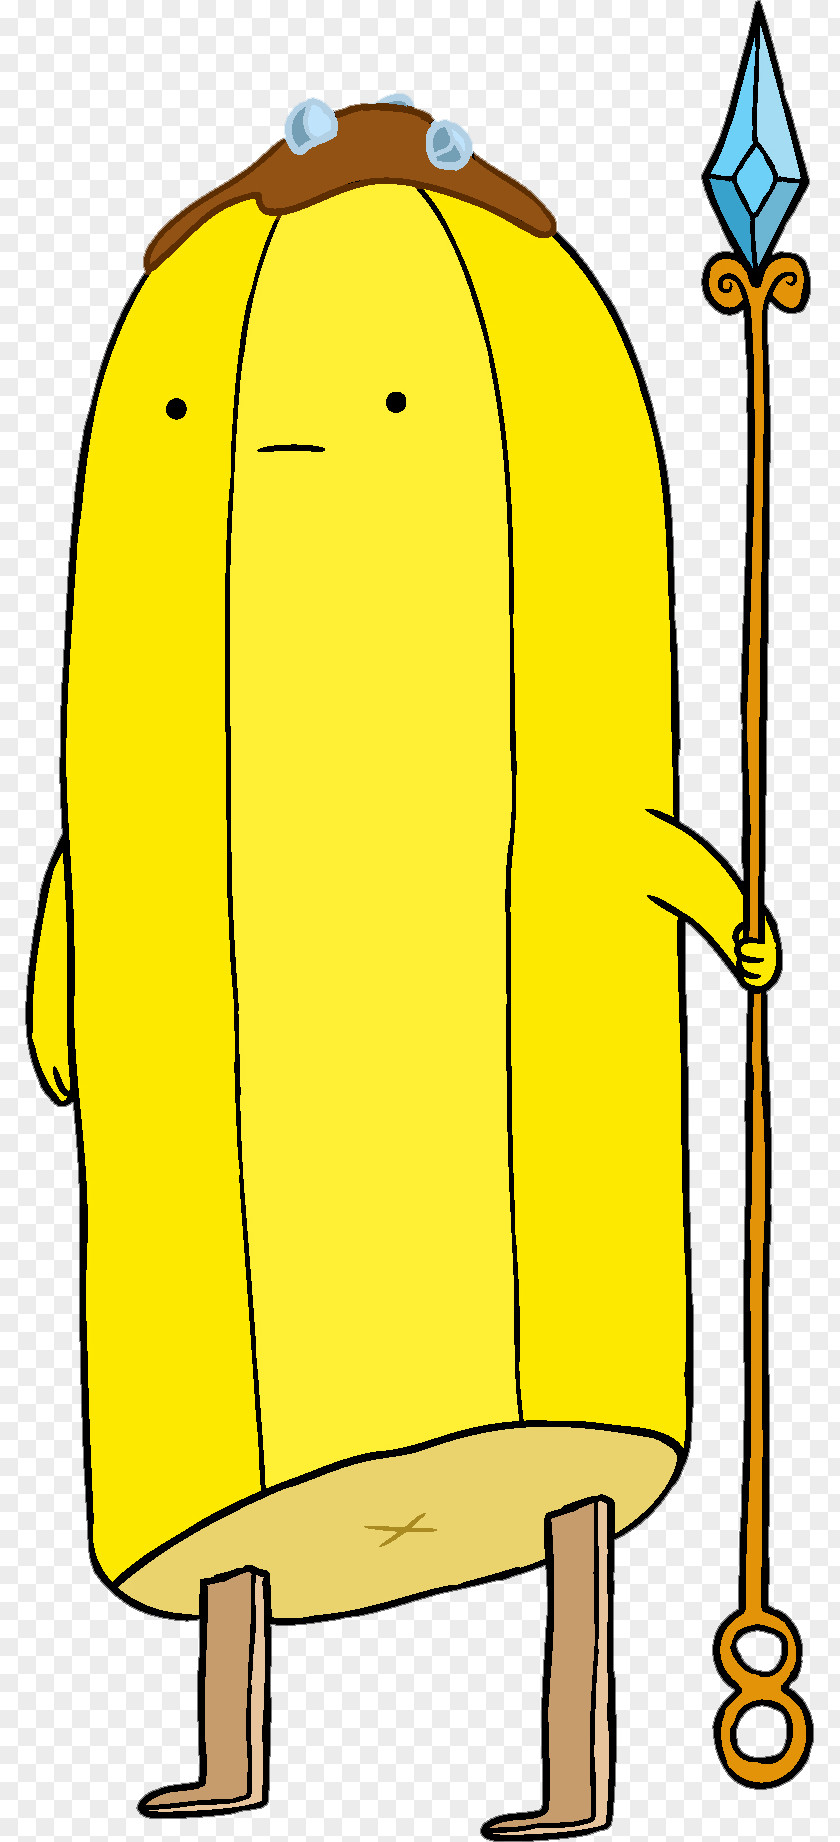 Adventure Time Finn The Human Jake Dog Princess Bubblegum Banana Cartoon Network PNG